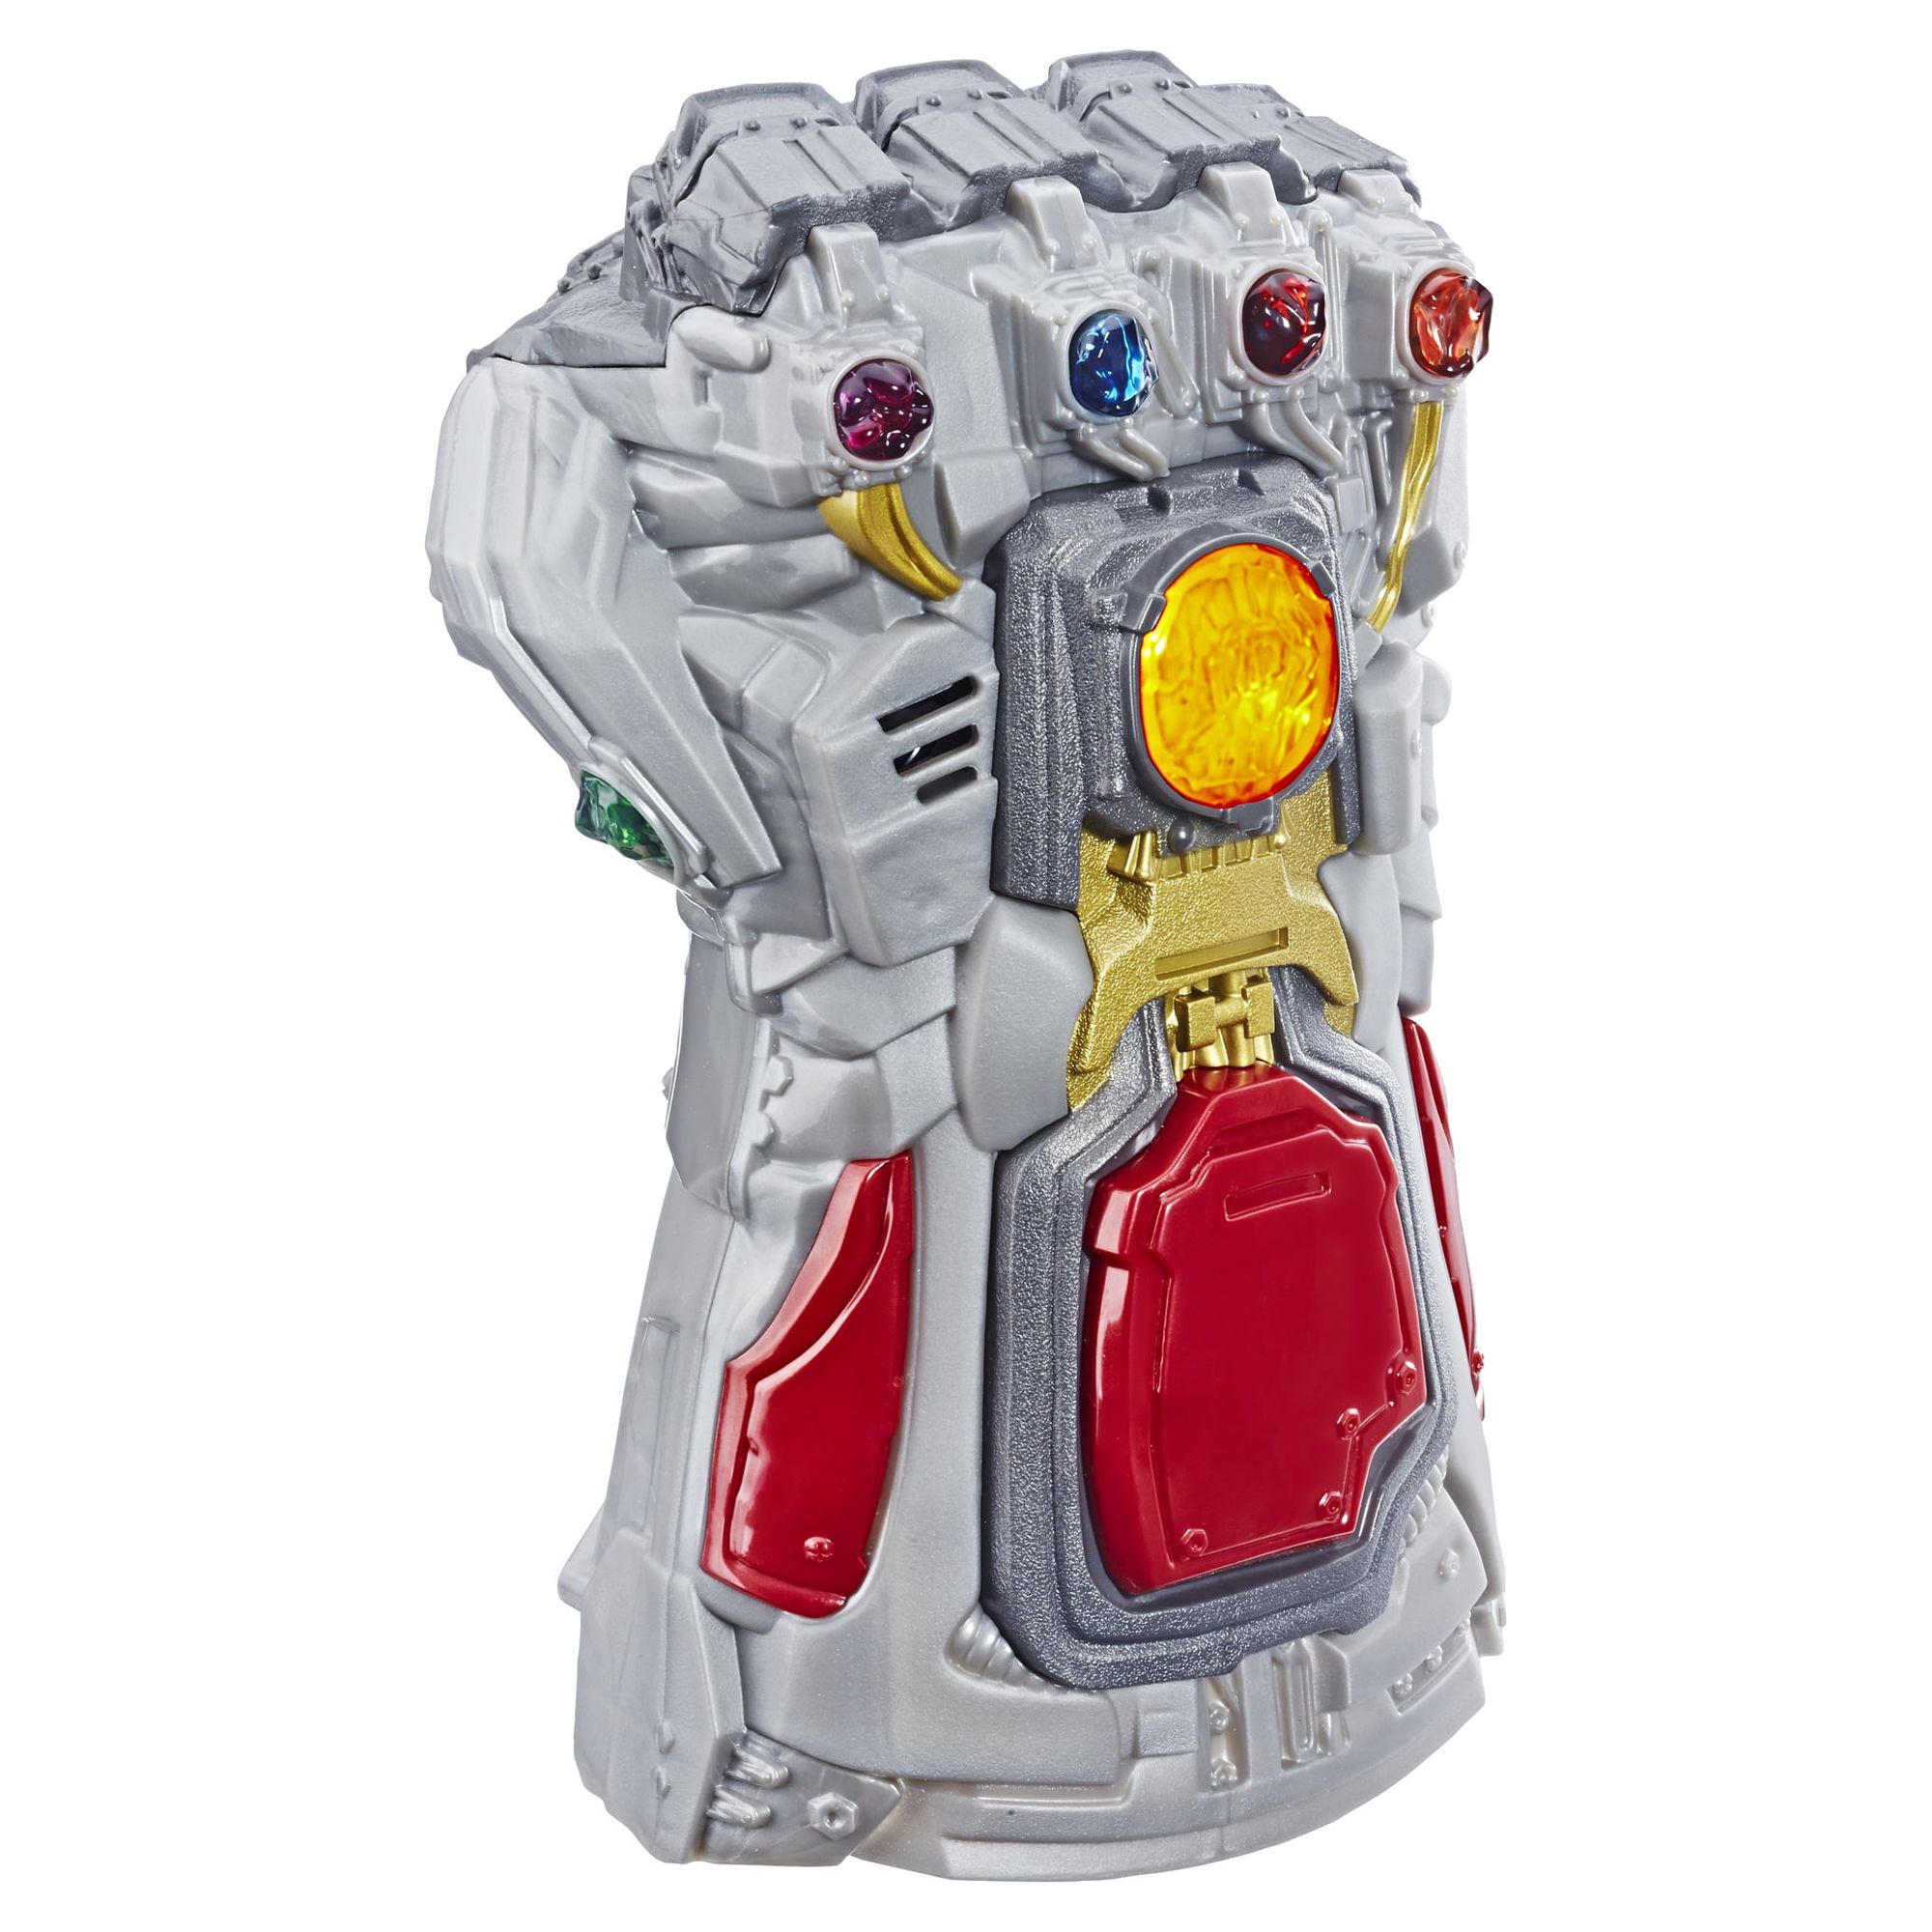 Marvel Avengers: Endgame Electronic Fist Roleplay Toy - image 1 of 8